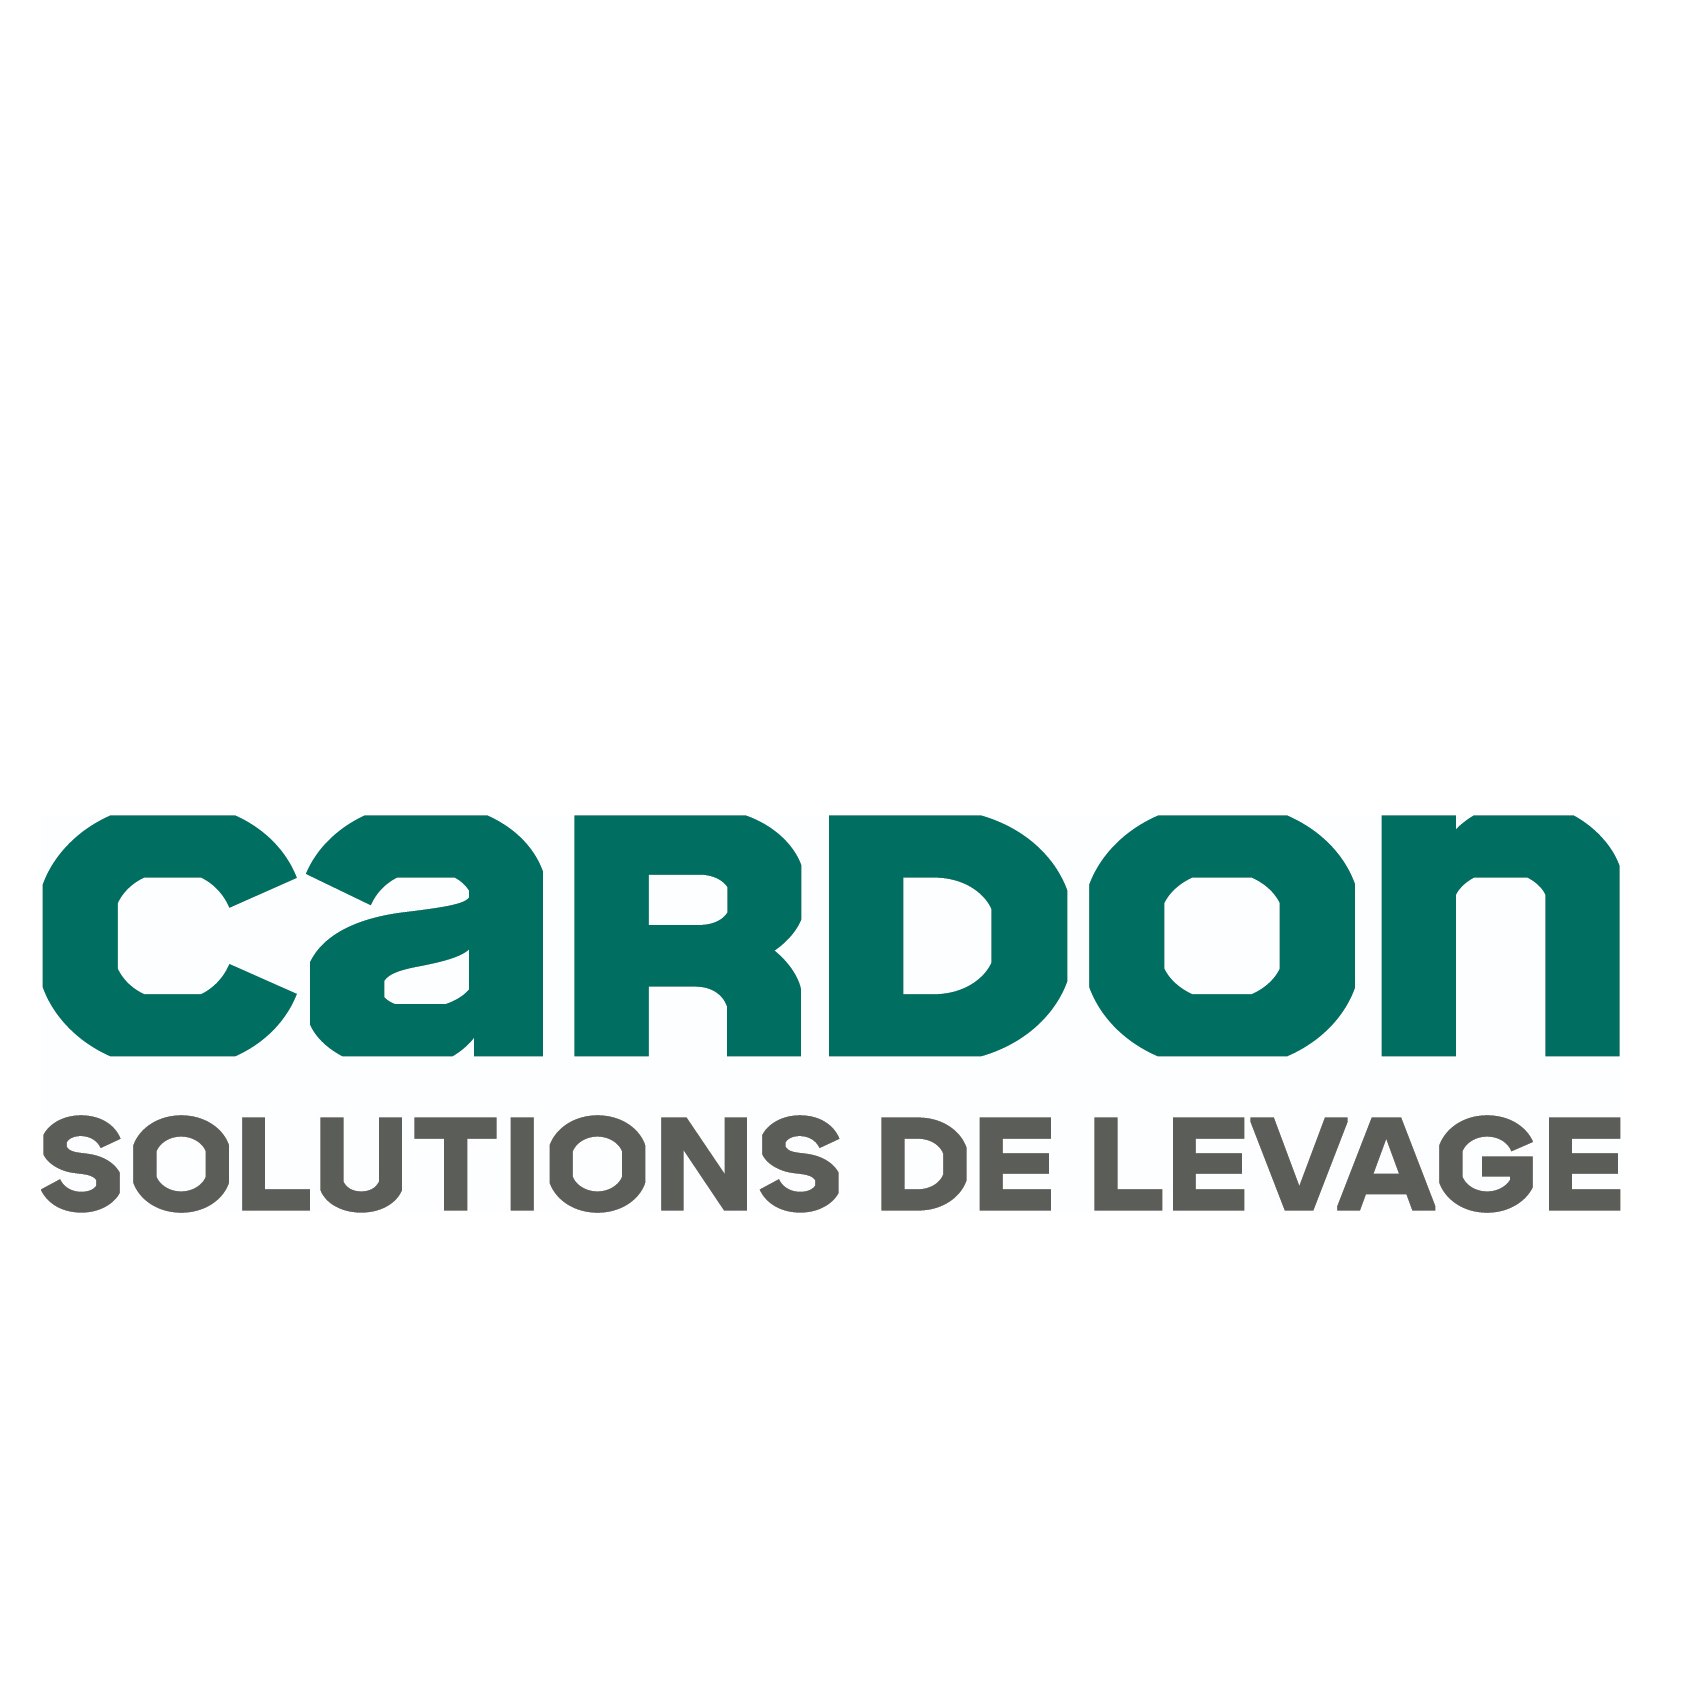 CARDON SOLUTIONS DE LEVAGE